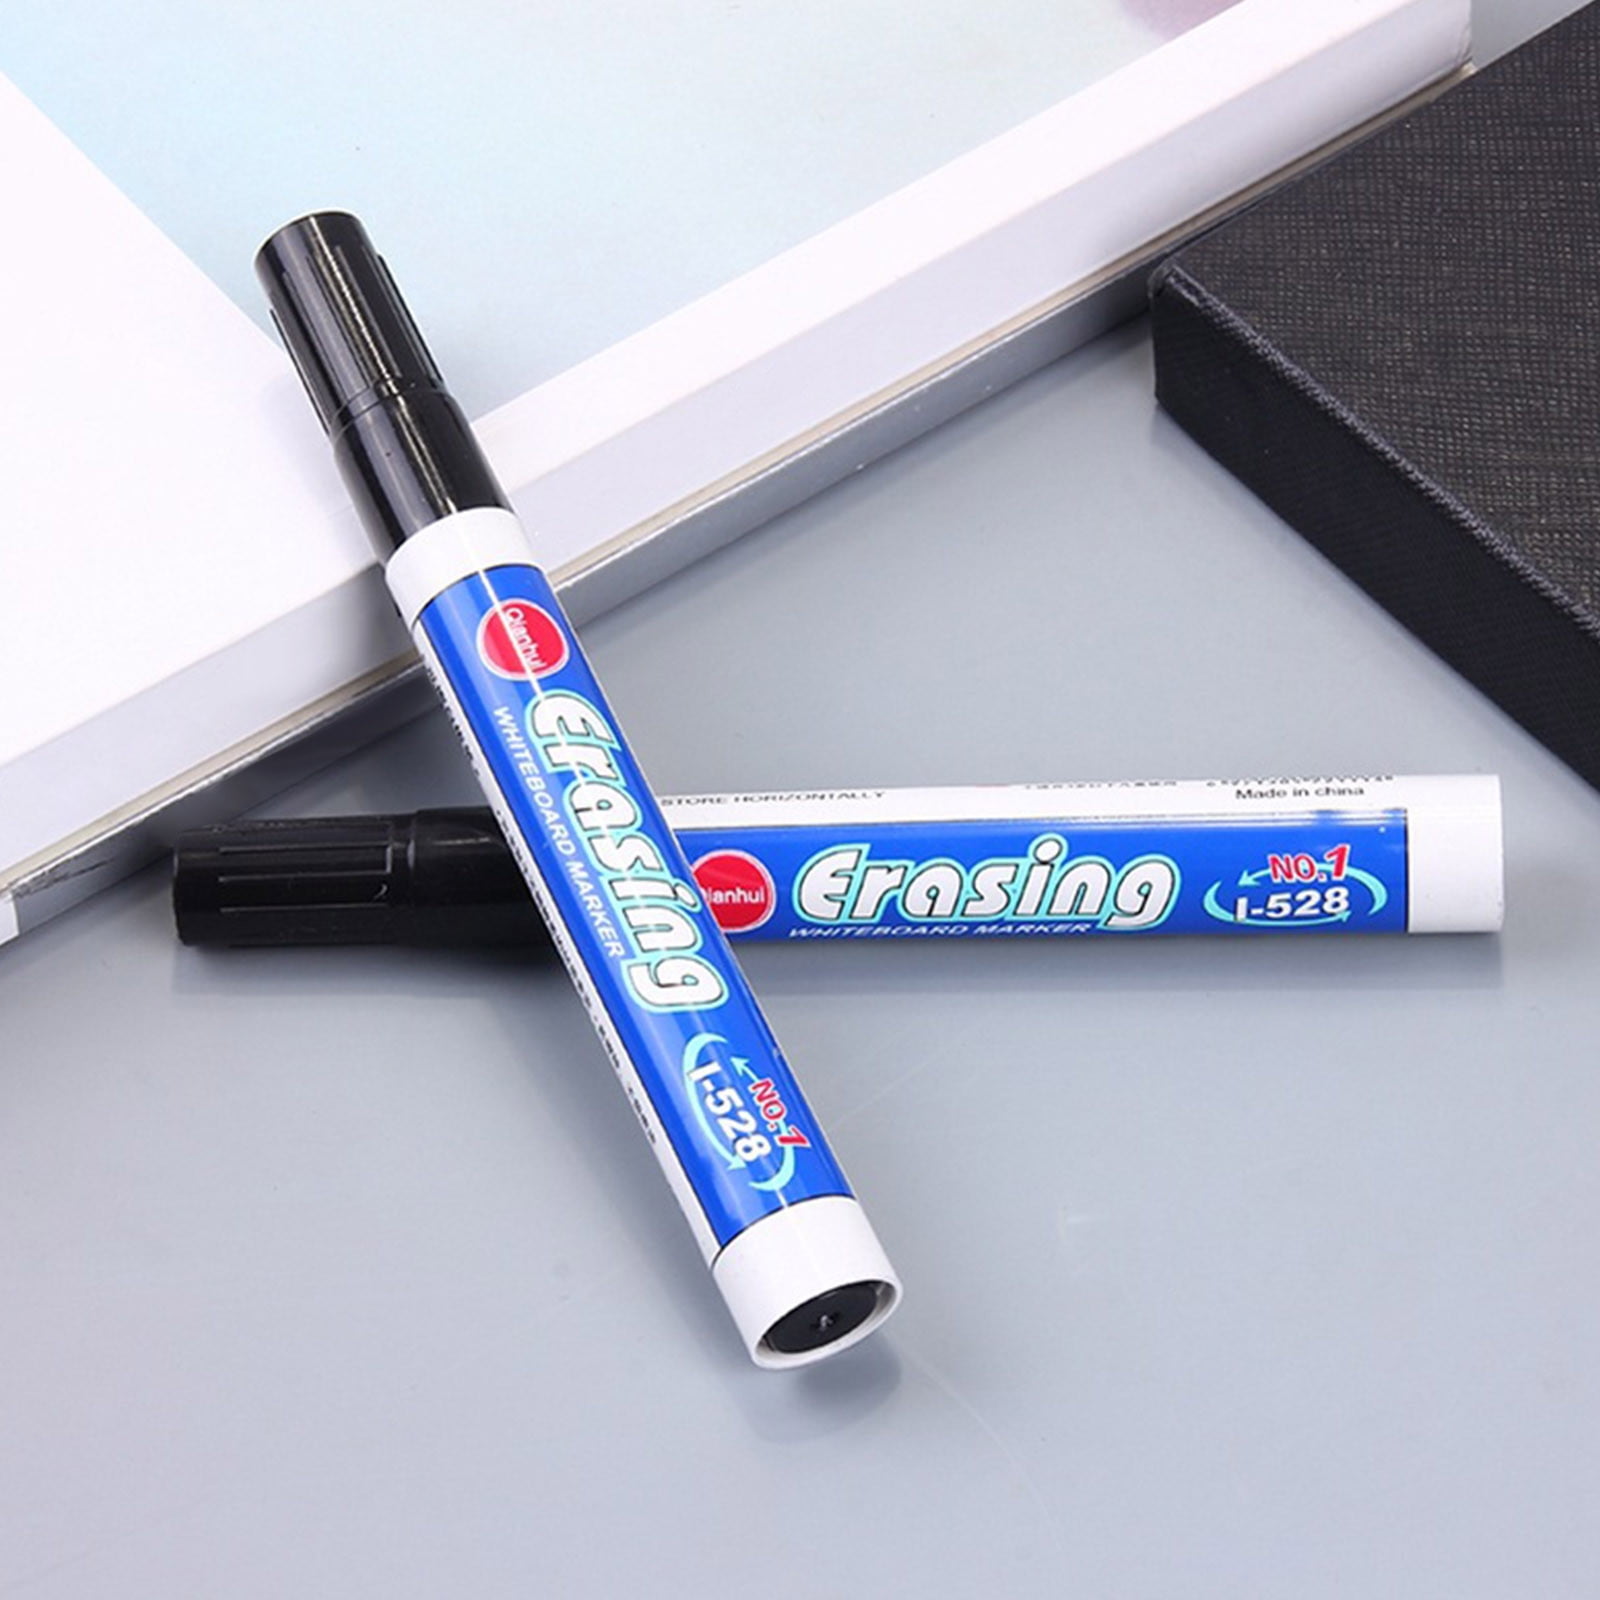 4 Pcs Fun Magical Water Painting Pen For Kids - Inspire Uplift